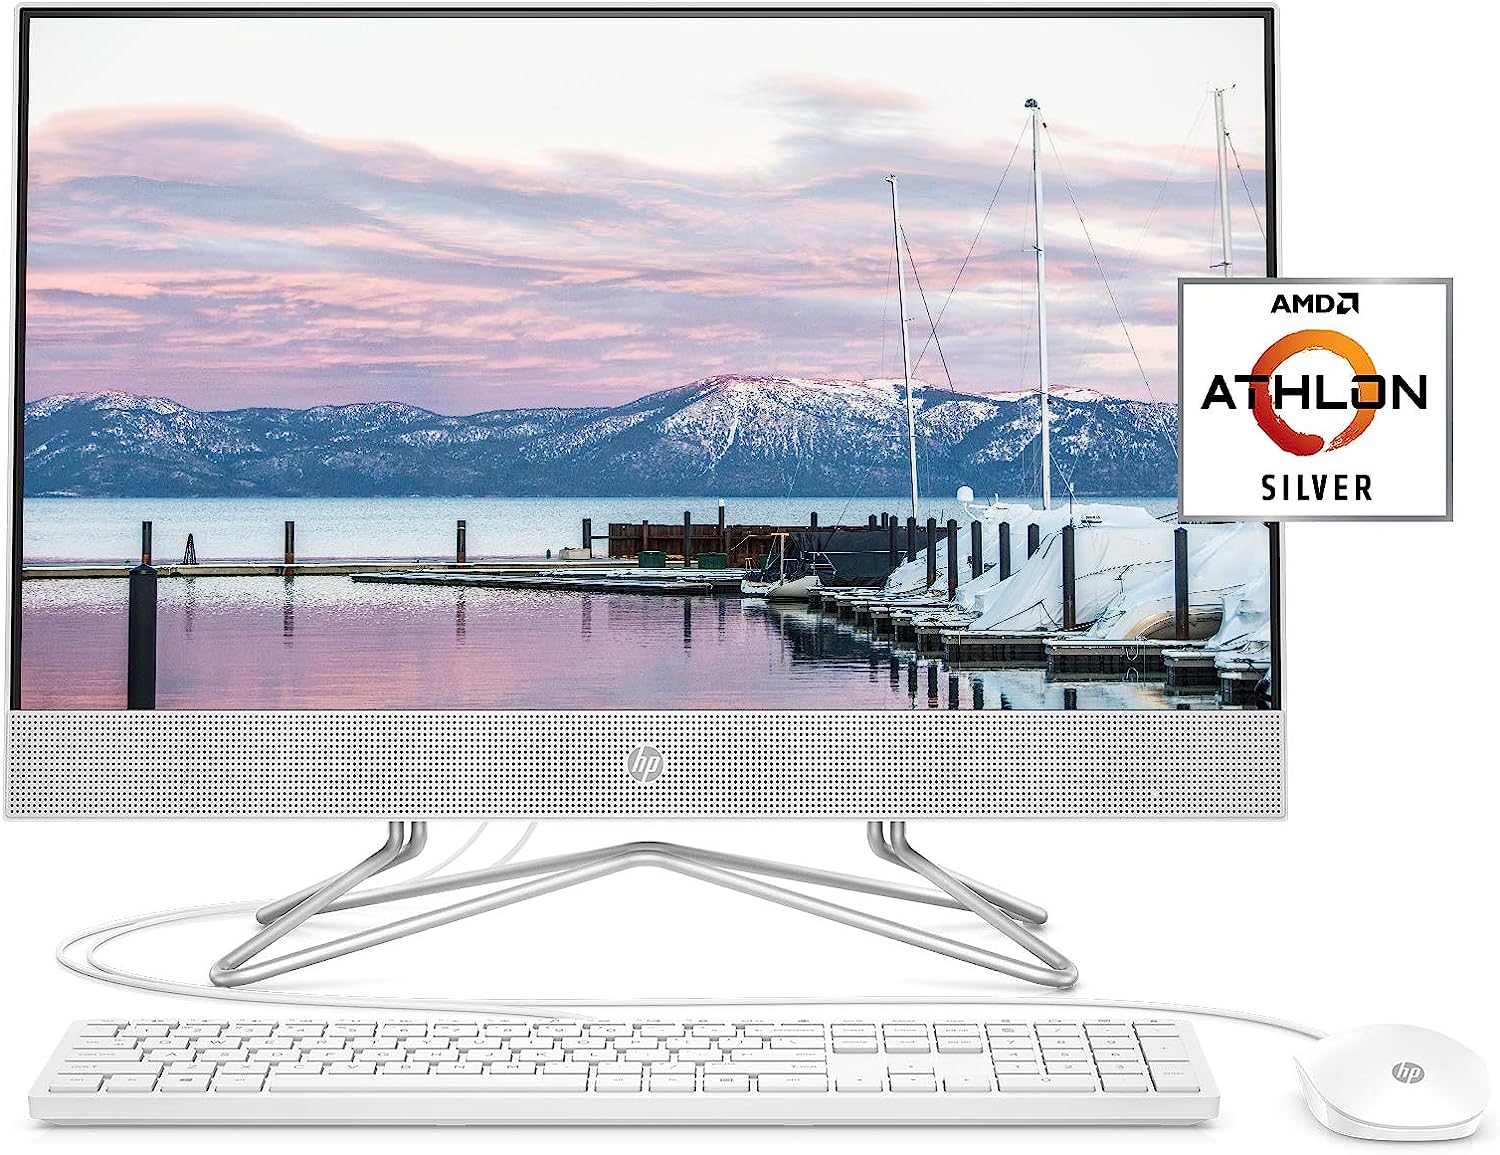 HP 24-inch All-in-One Desktop Computer